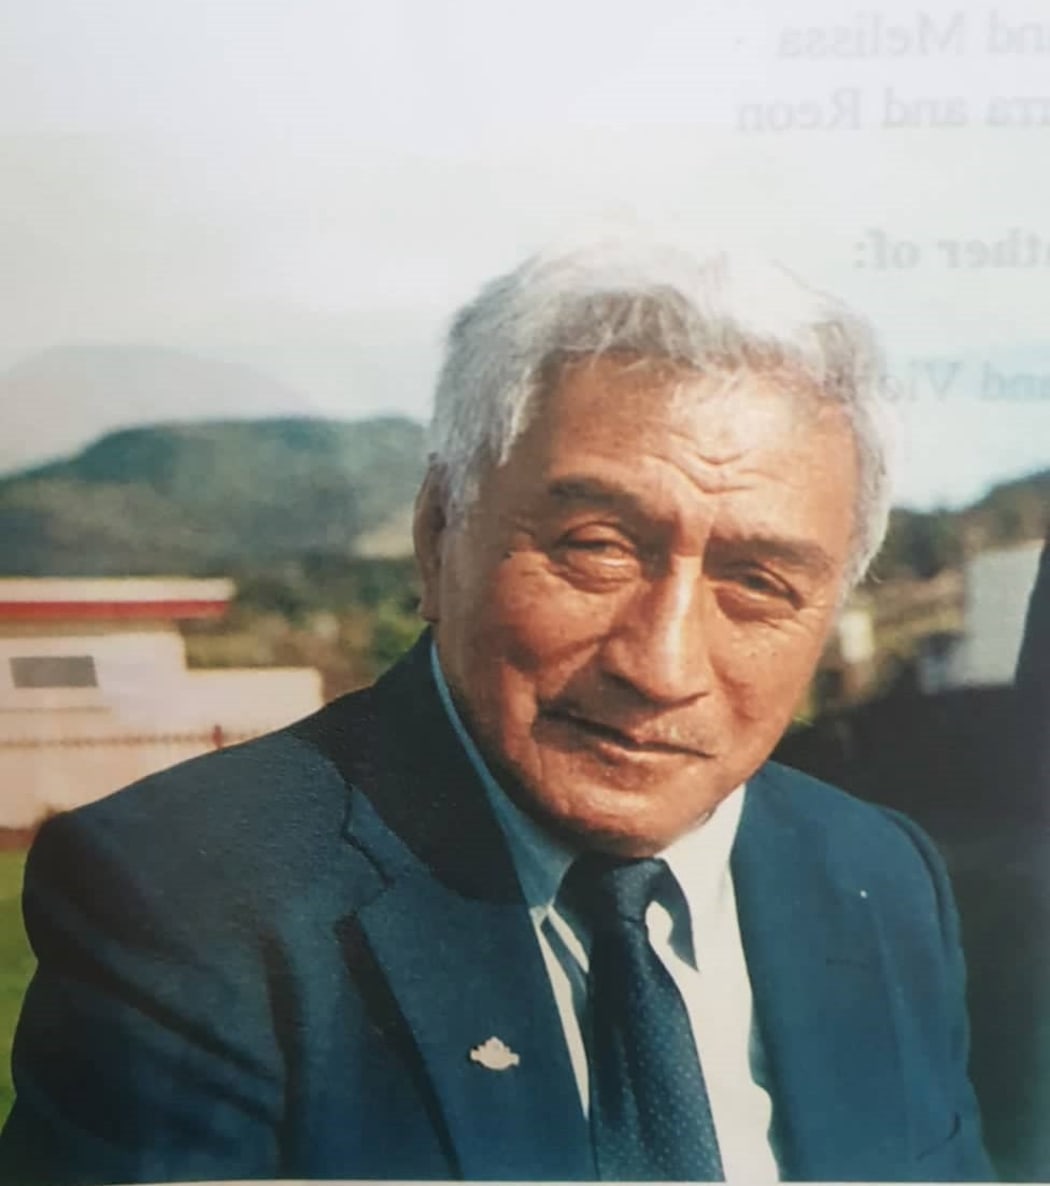 Tako Houpapa was a member of the 28th Māori Battalion.